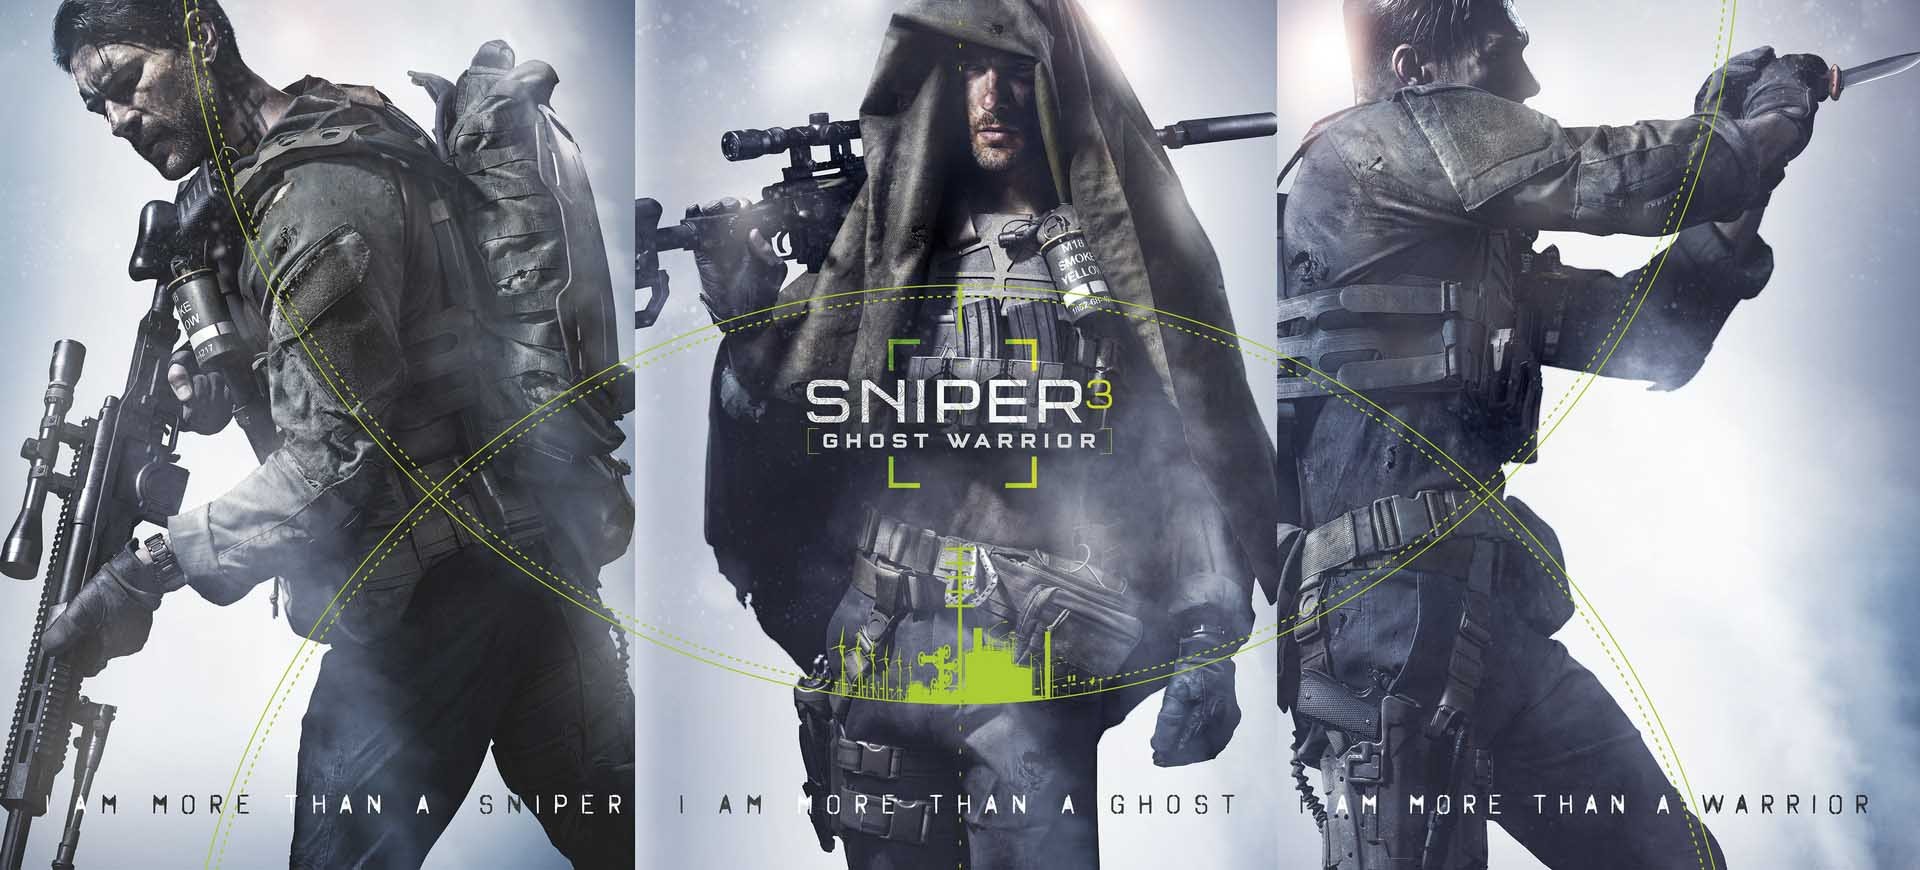 Sniper Ghost Warrior 3 - Bóng ma tử thần